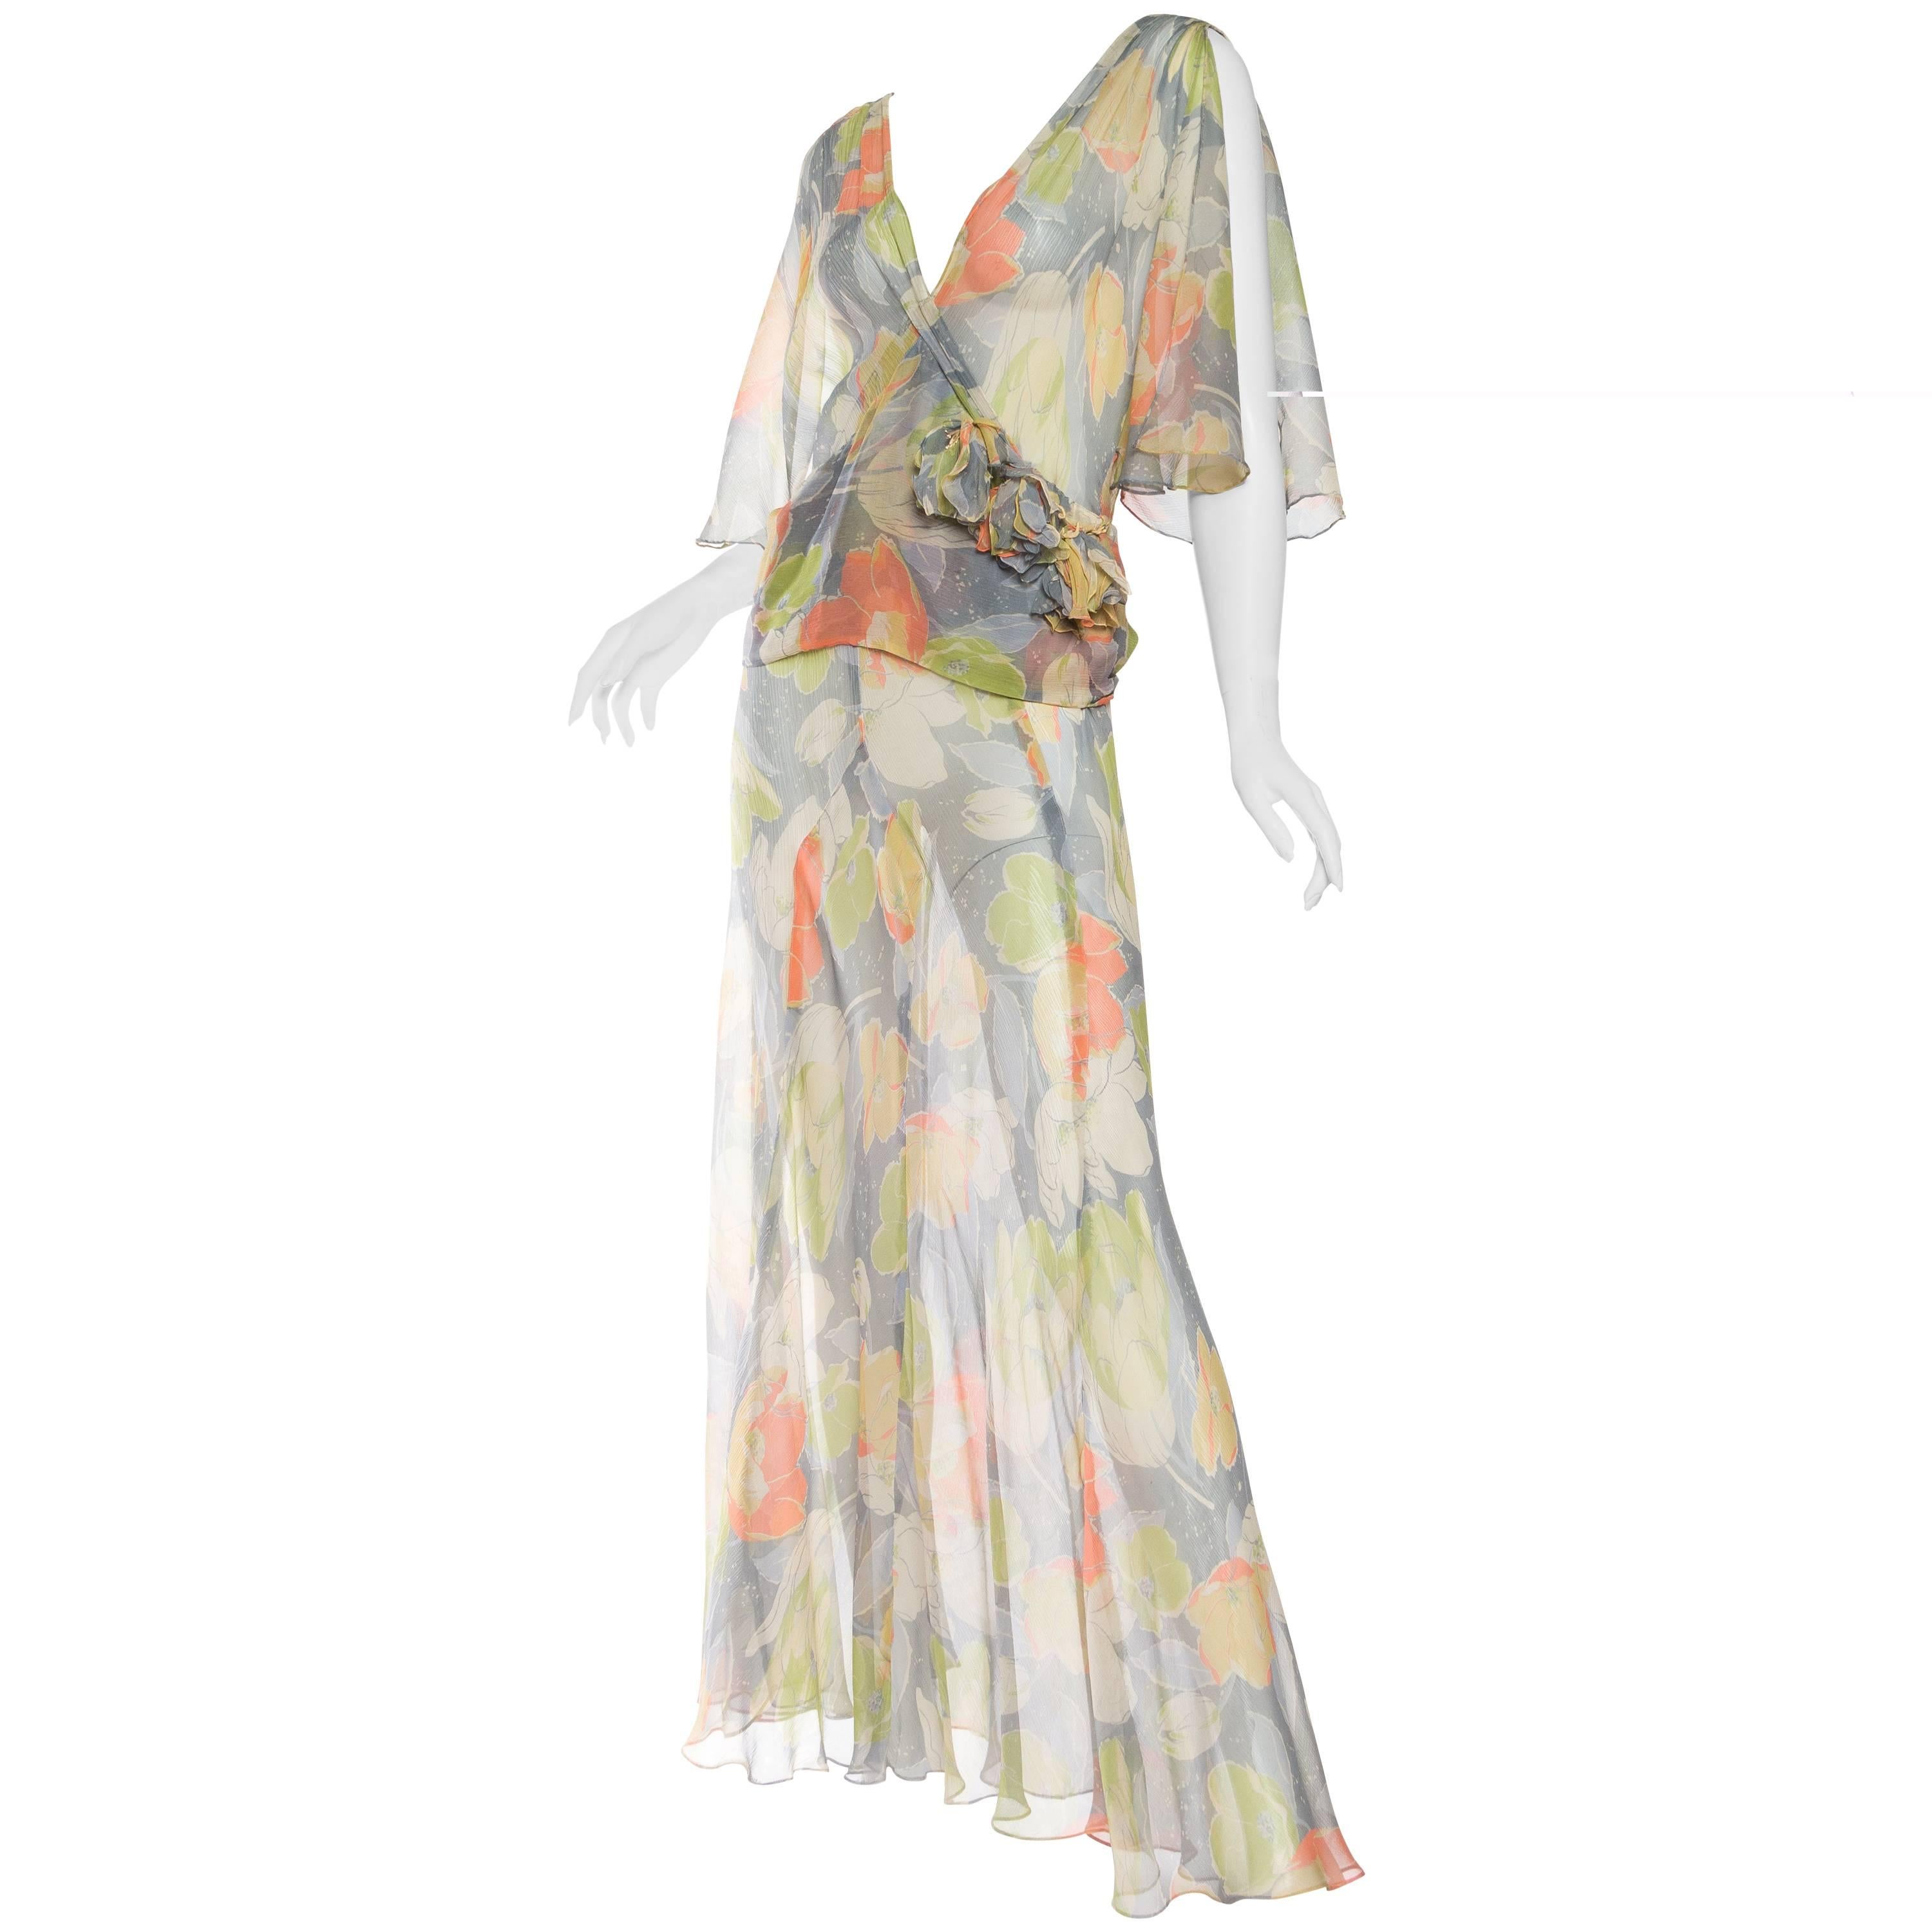 Beautifully Finished Sheer 1930s Bias-Cut Floral Silk Chiffon Dress